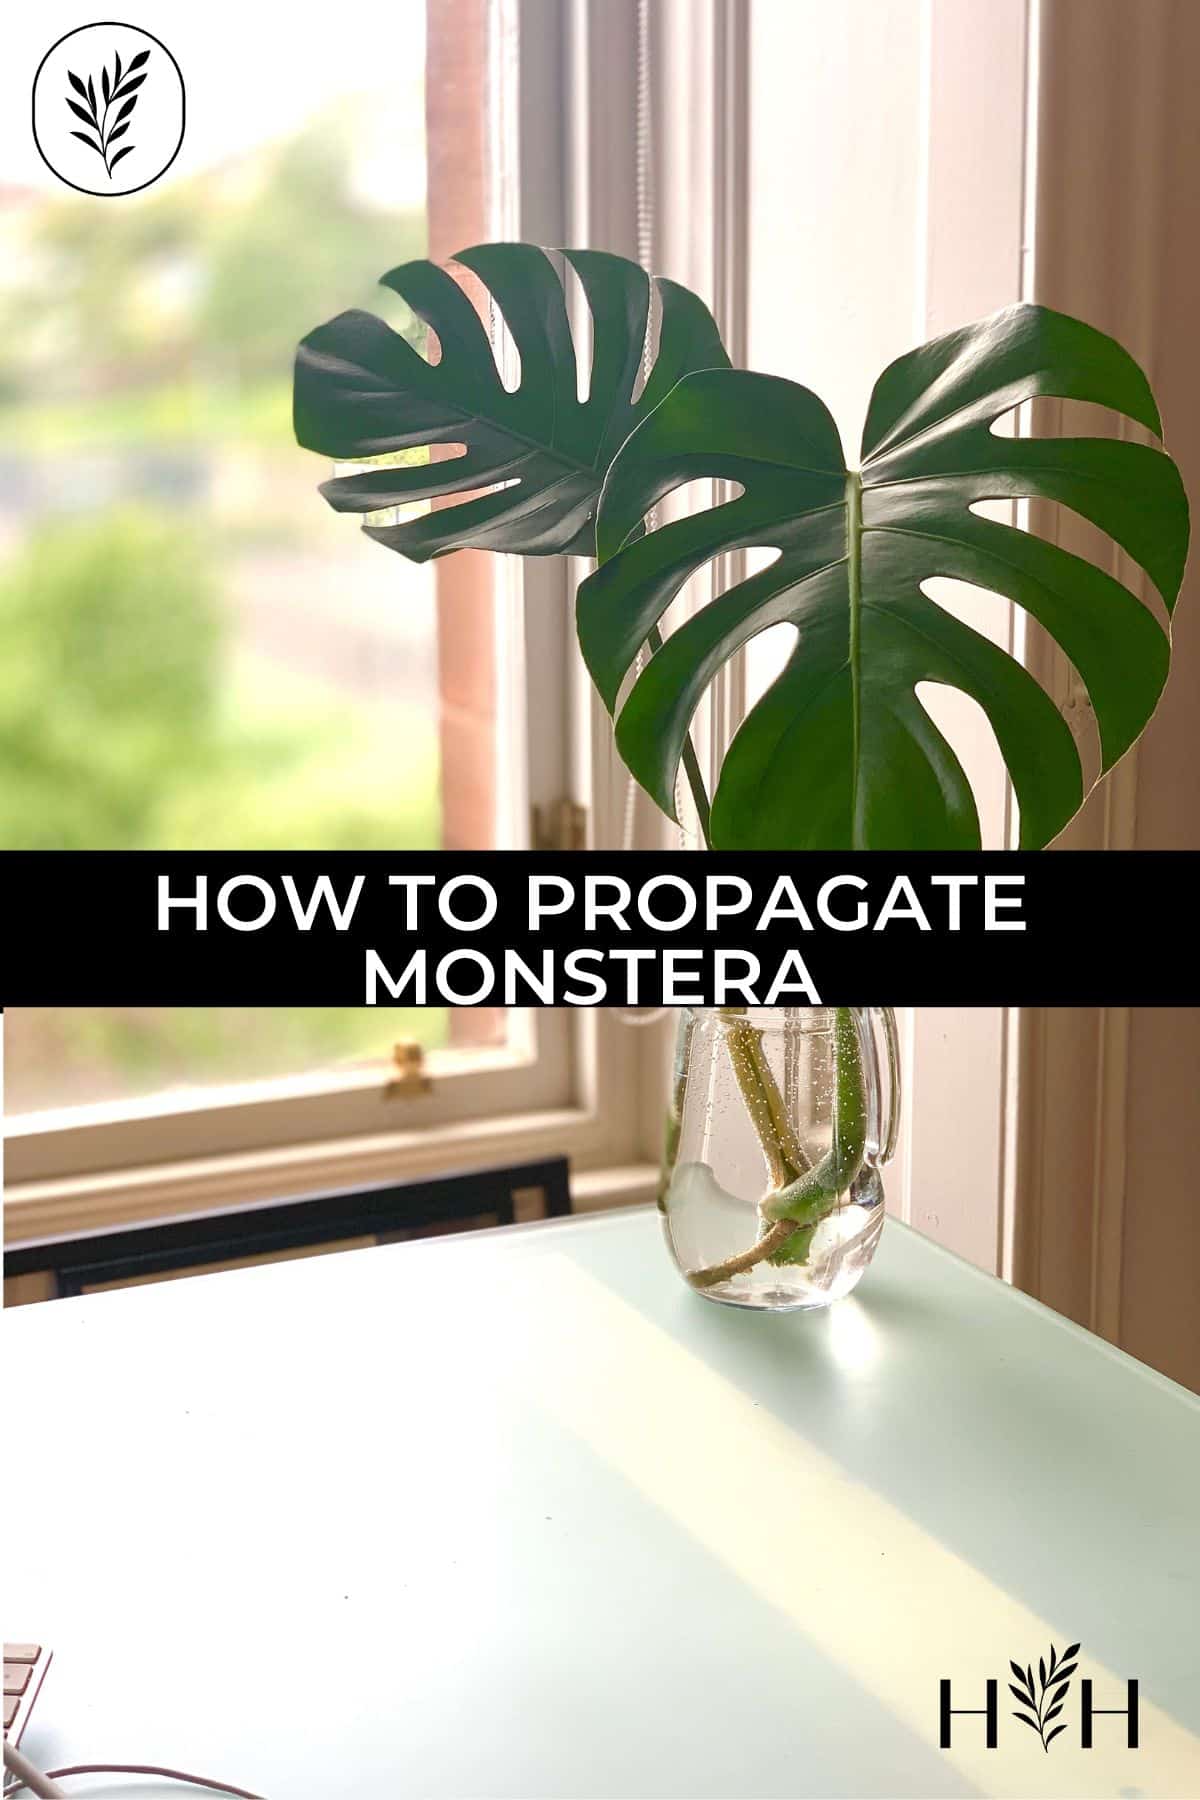 How to propagate monstera via @home4theharvest